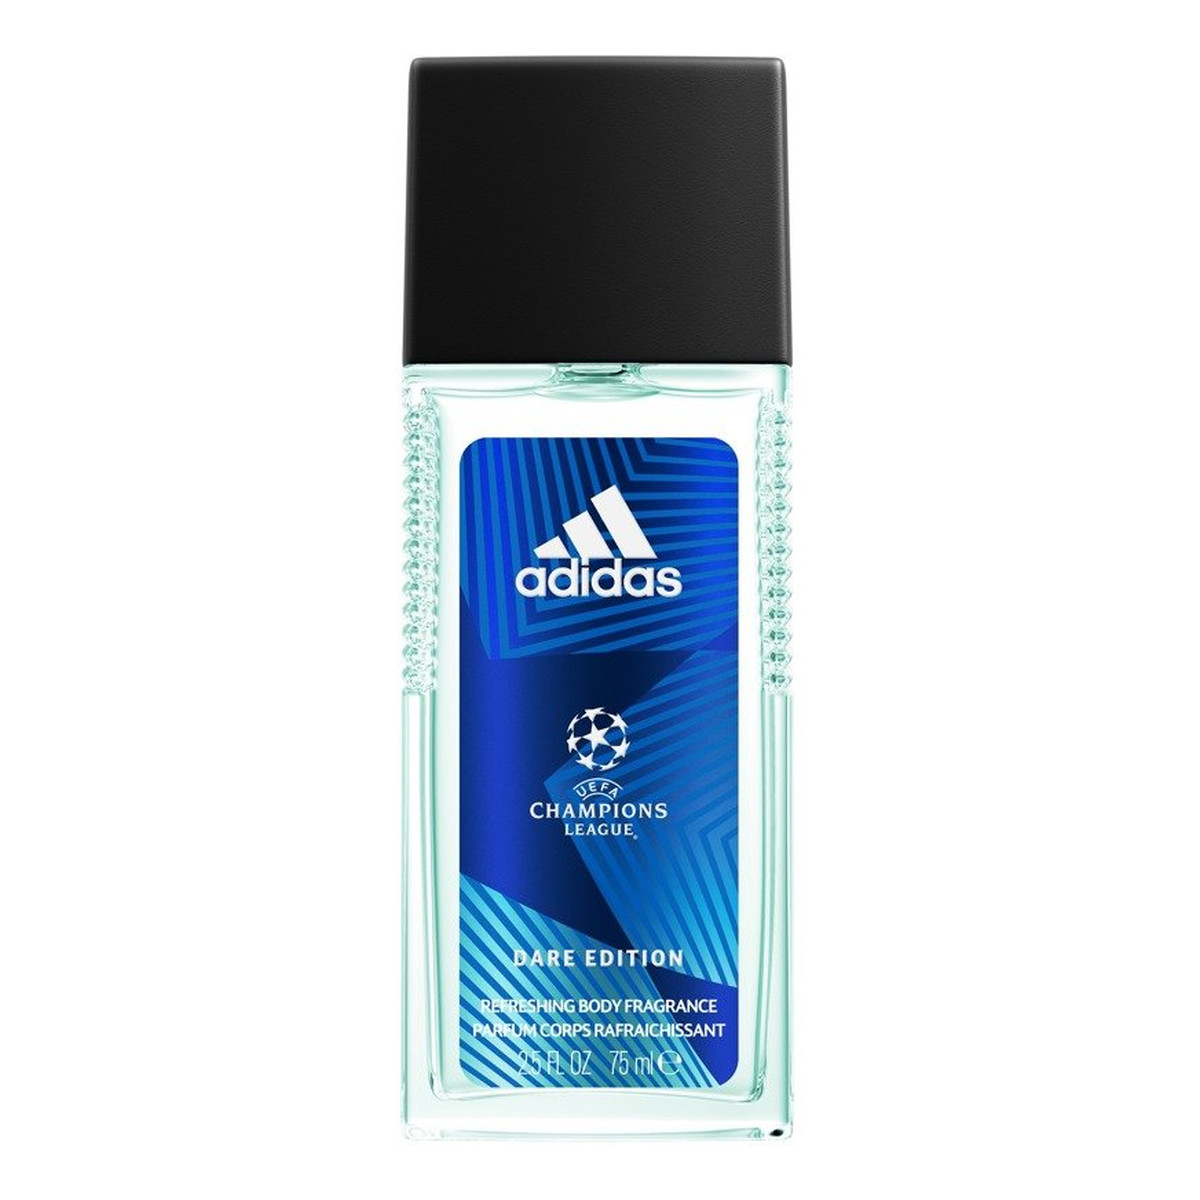 Adidas UEFA Champions League Dare Edition Dezodorant w naturalnym spray'u 75ml